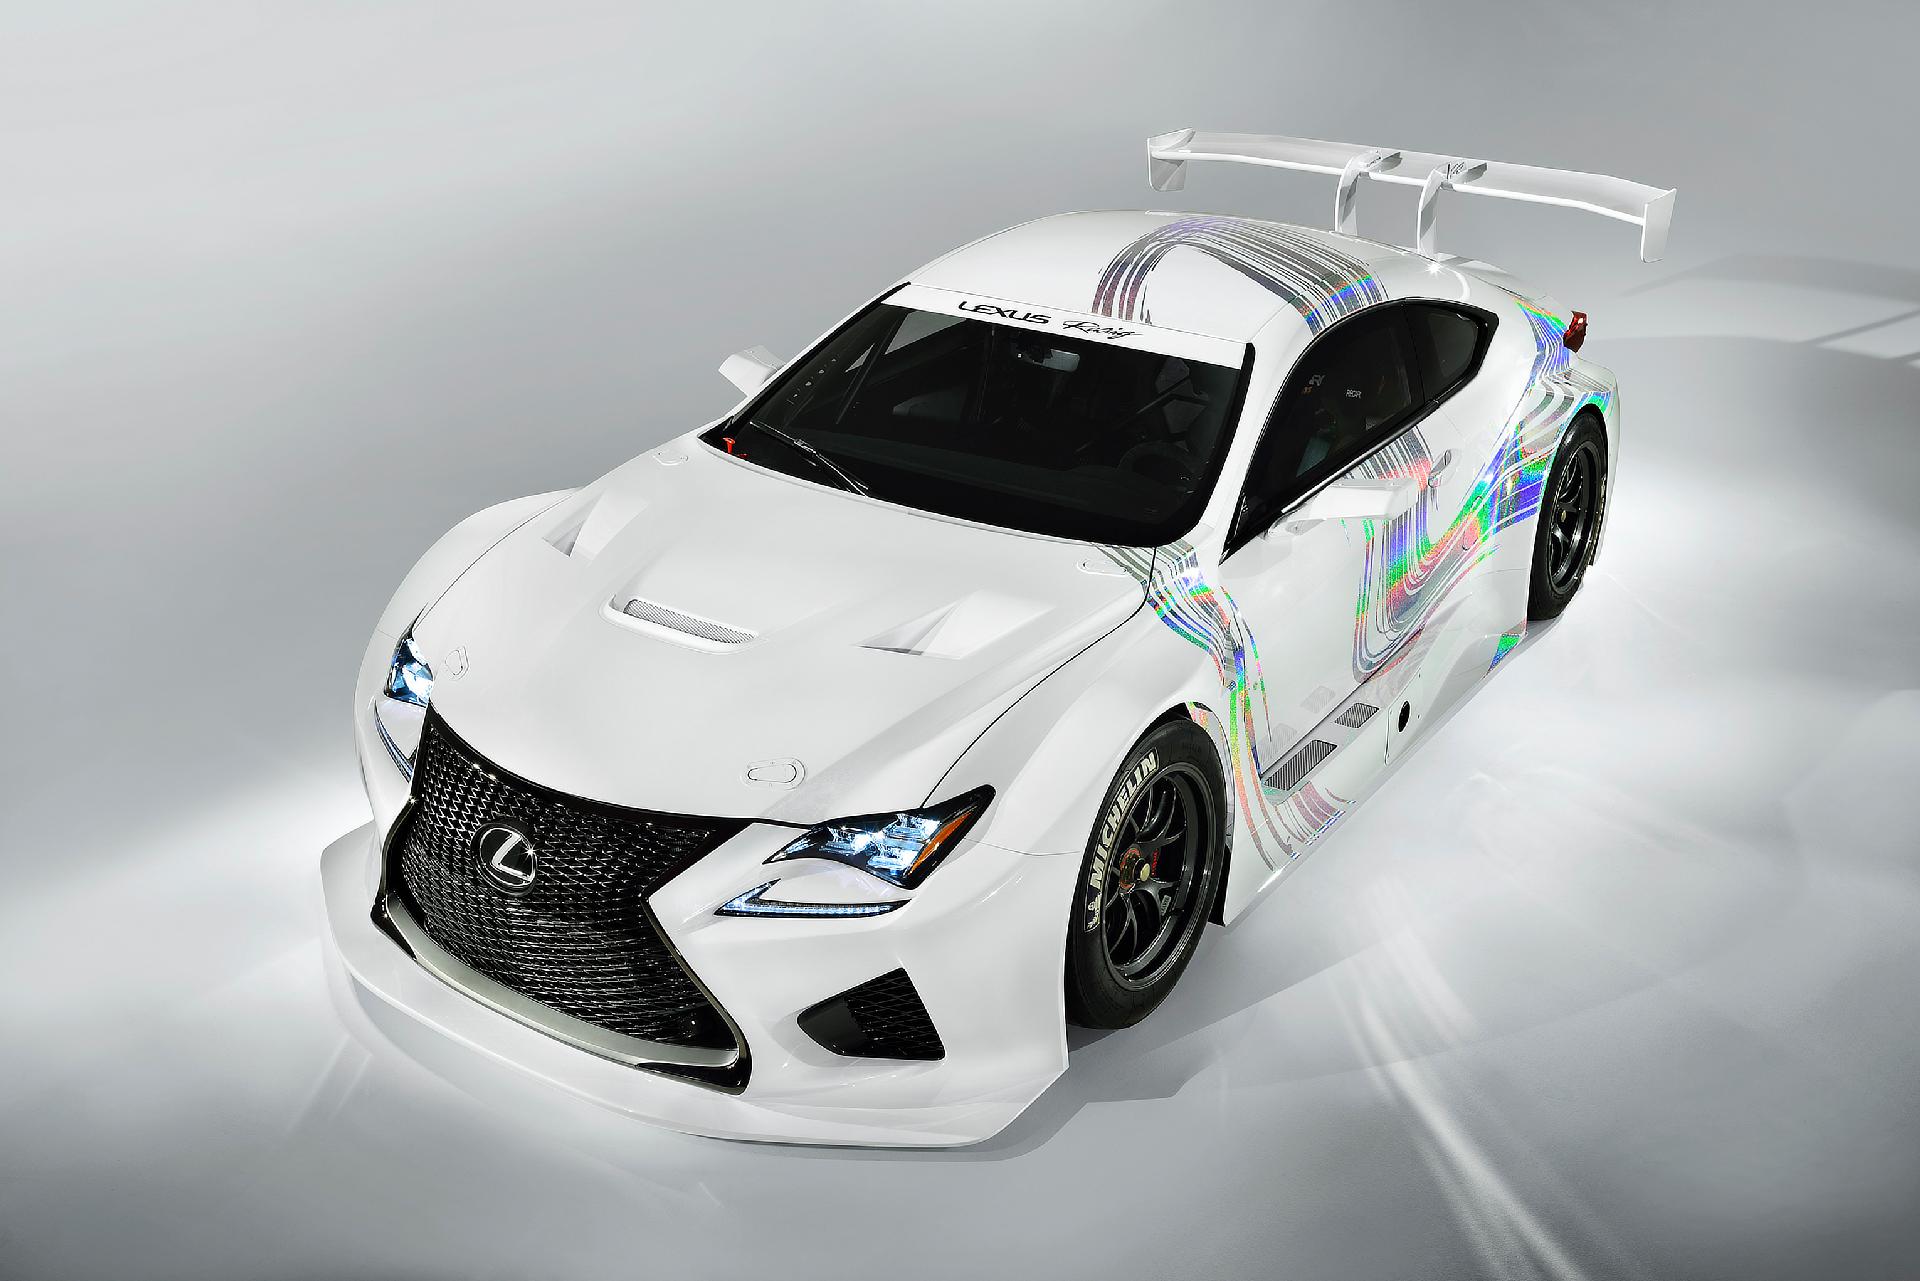 LexusRC F GT3 Concept